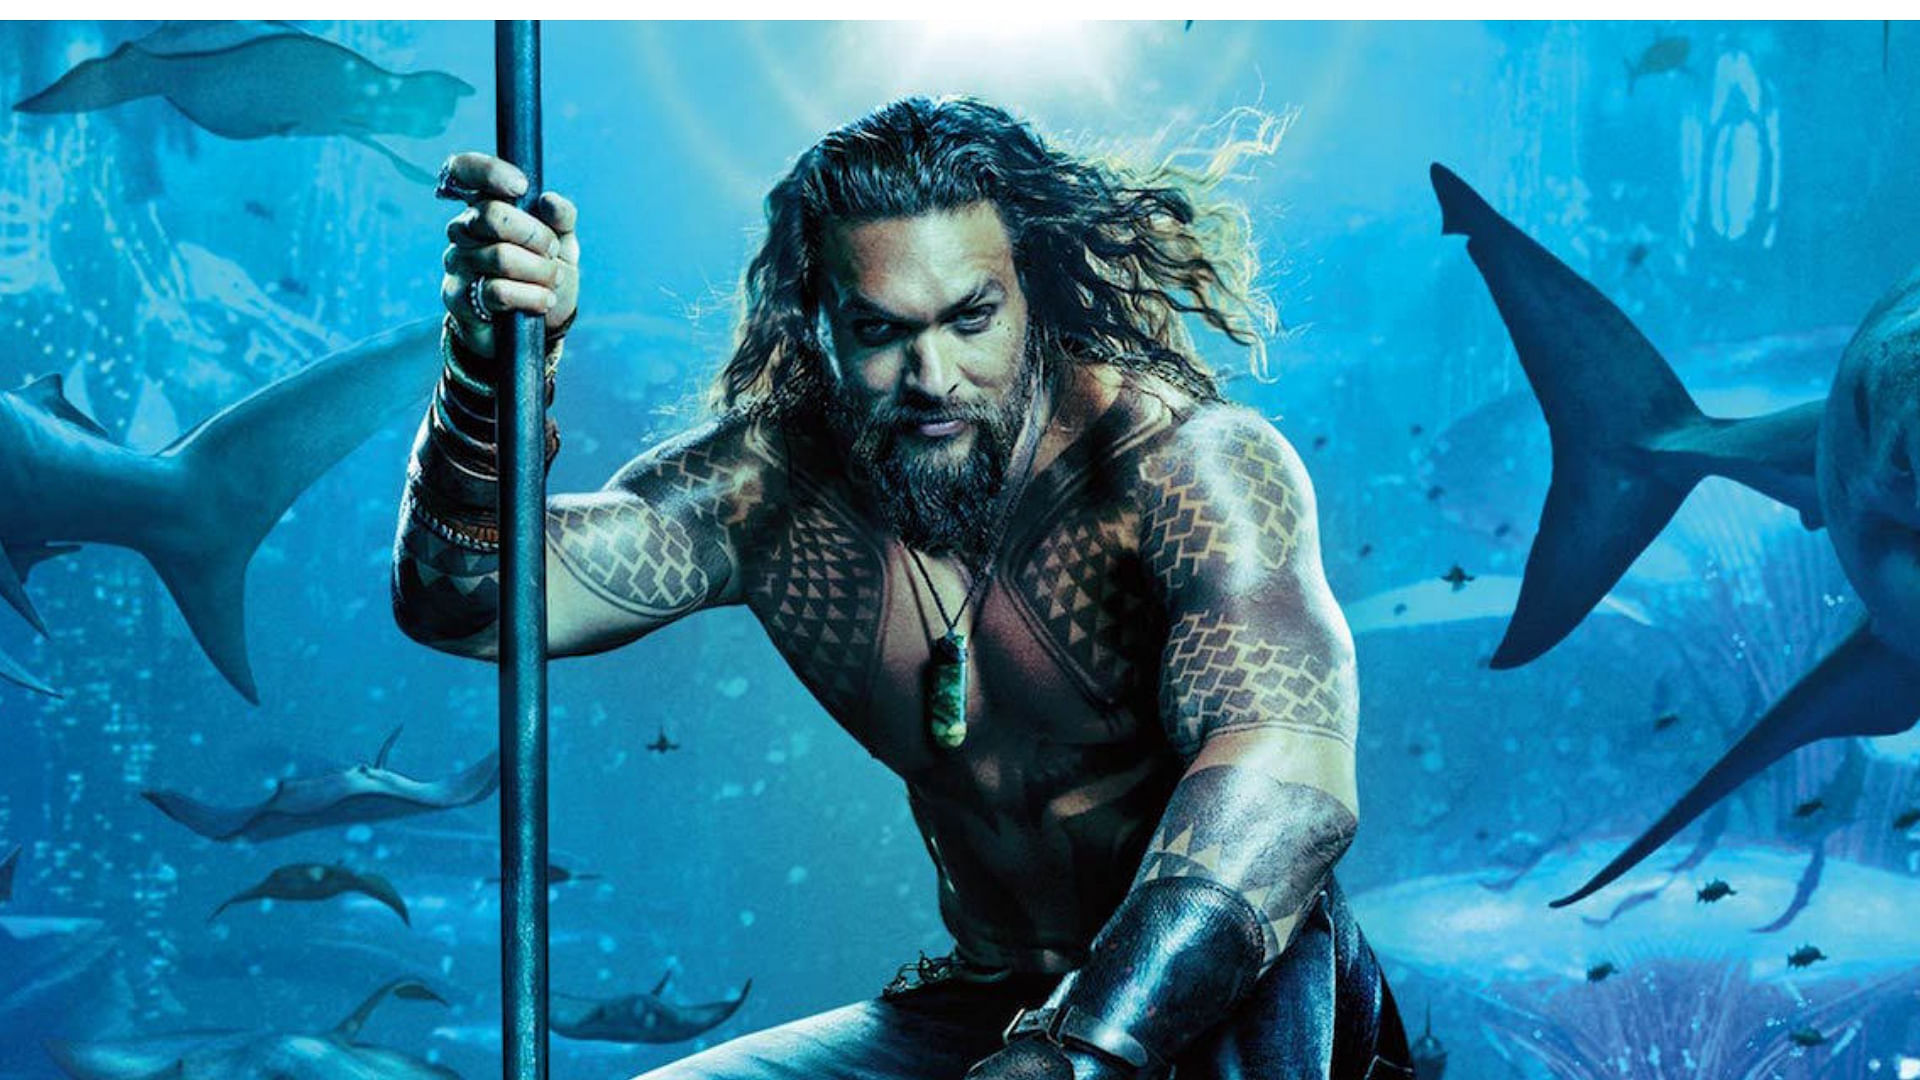 Jason Momoa in the poster for <i>Aquaman</i>.